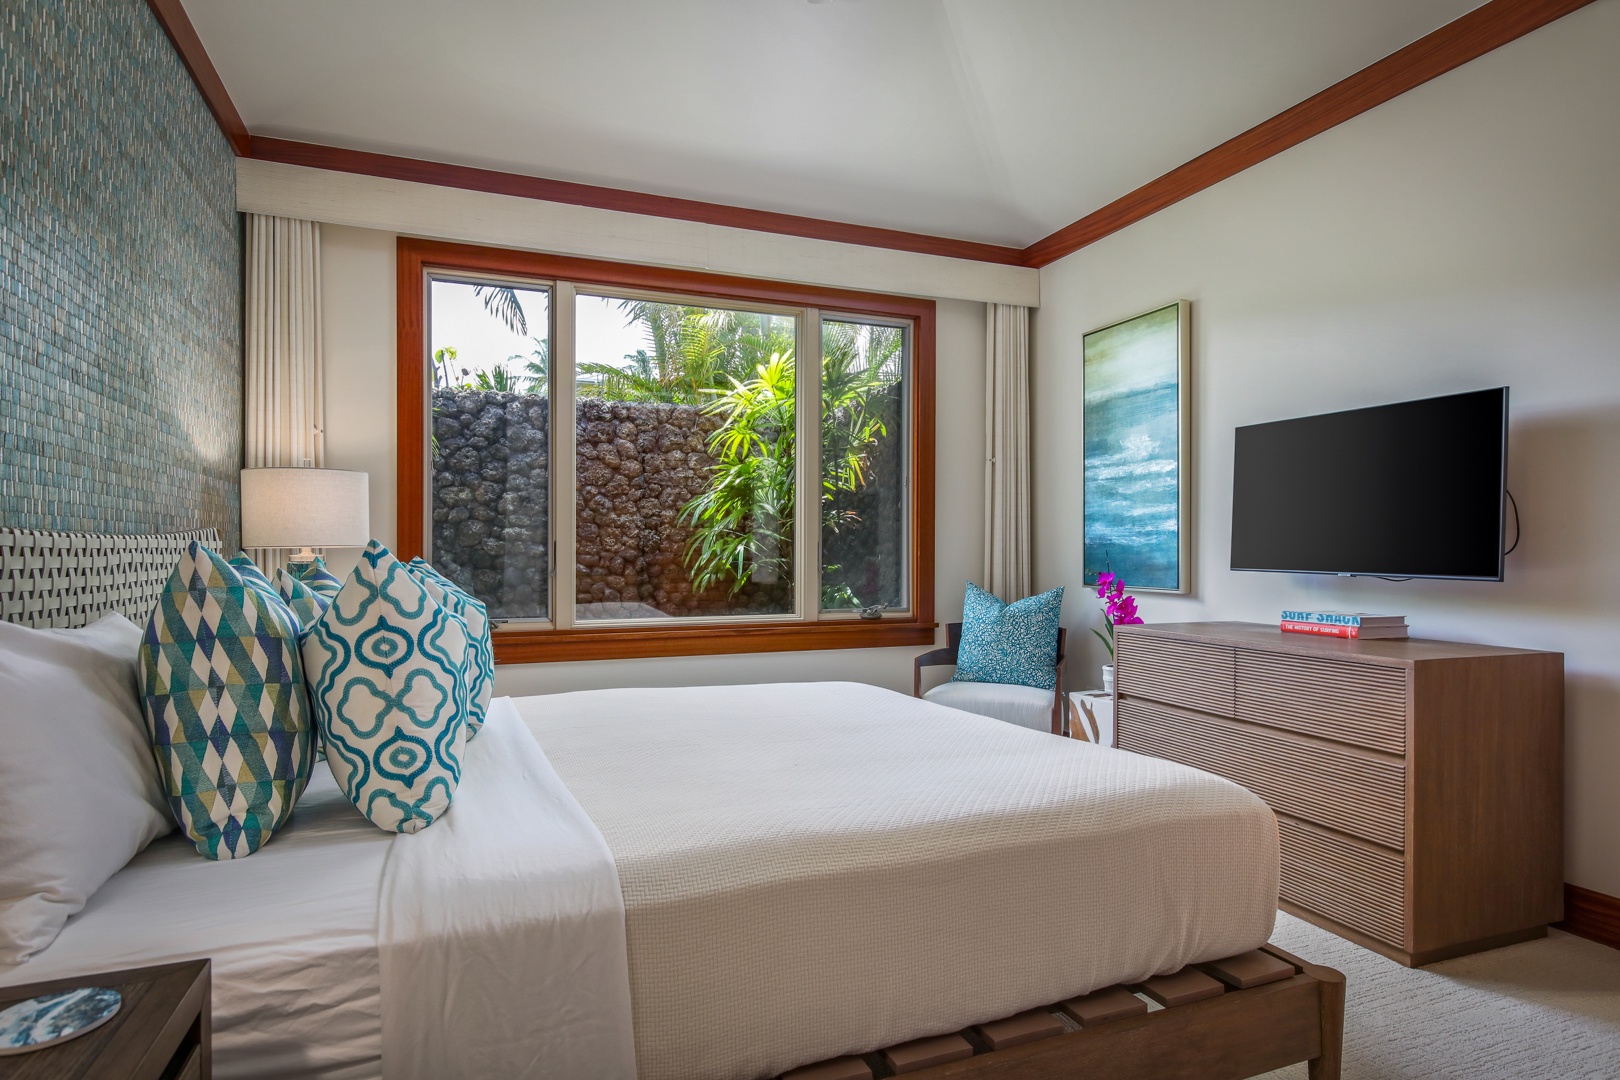 Kailua Kona Vacation Rentals, 4BD Hainoa Estate (122) at Four Seasons Resort at Hualalai - Alternate view of Guest Room 3.